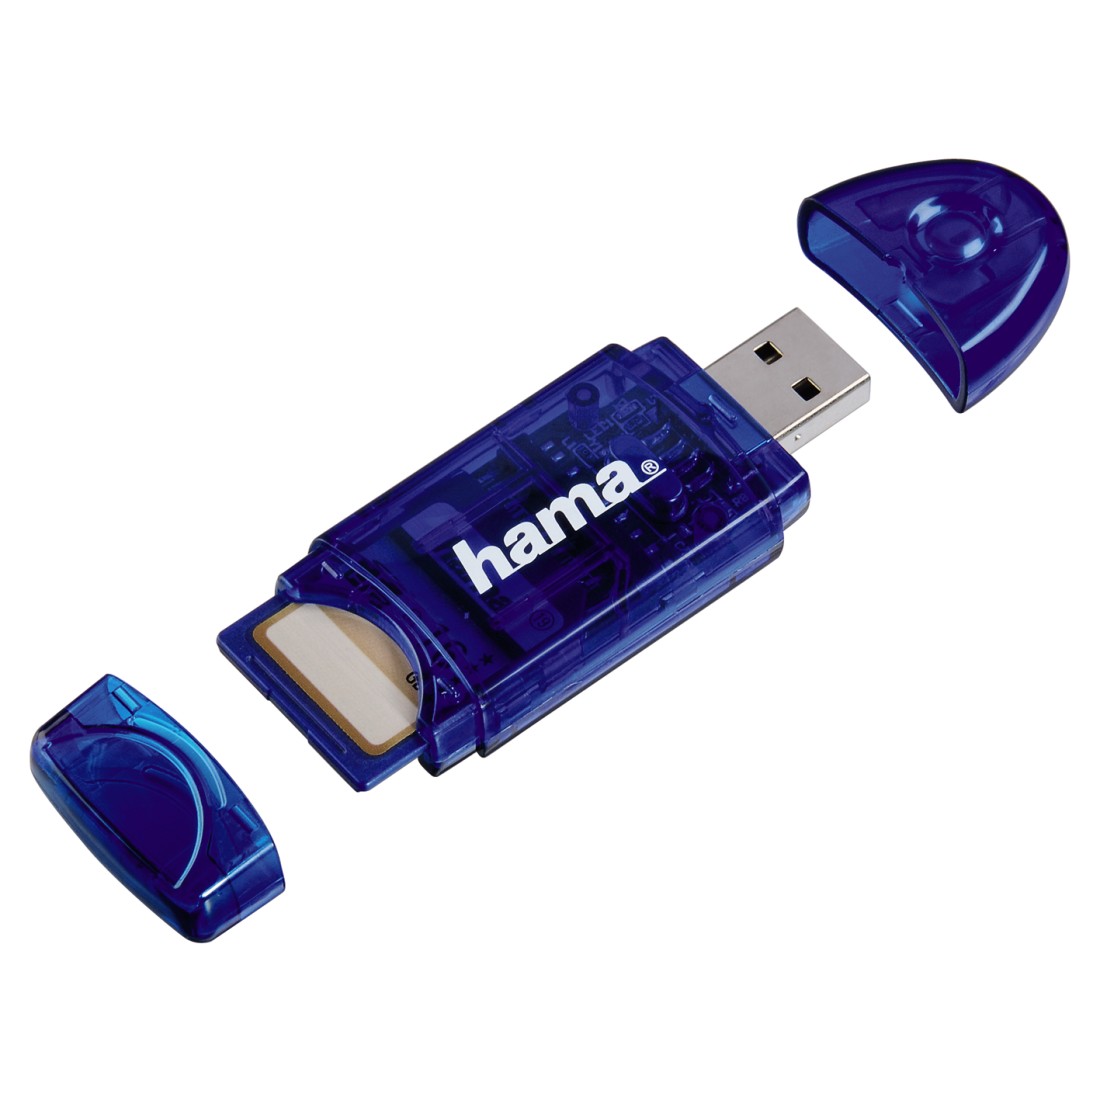 00055310 Hama USB 2.0 SD Card Reader, blue